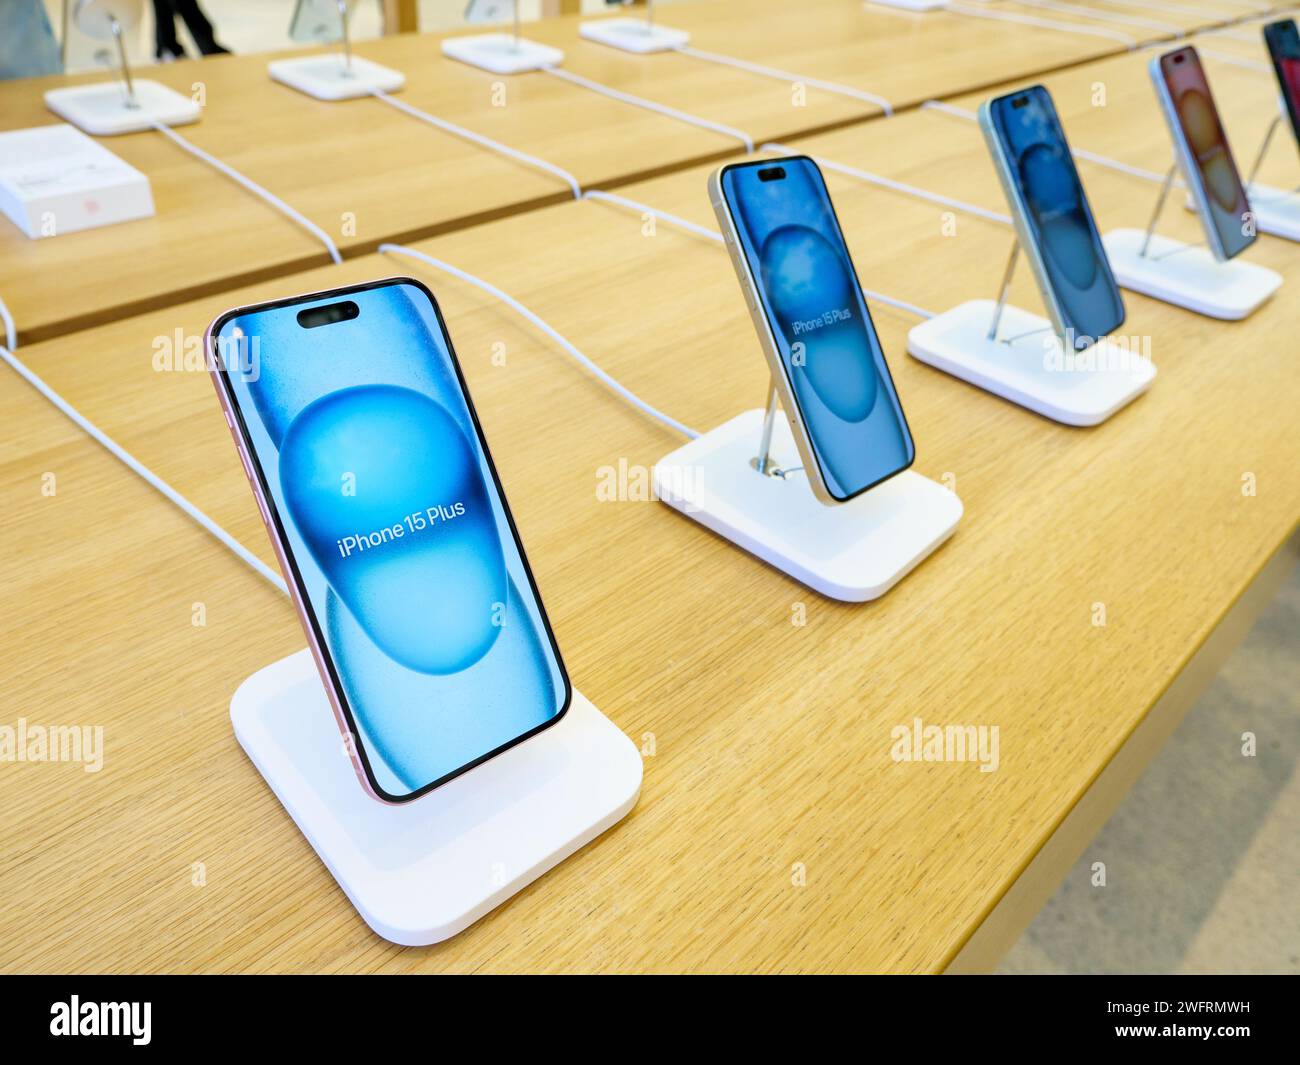 London, UK - January 9, 2024: Apple iPhone 15 Plus smartphones for sale inside the Apple Store Stock Photo